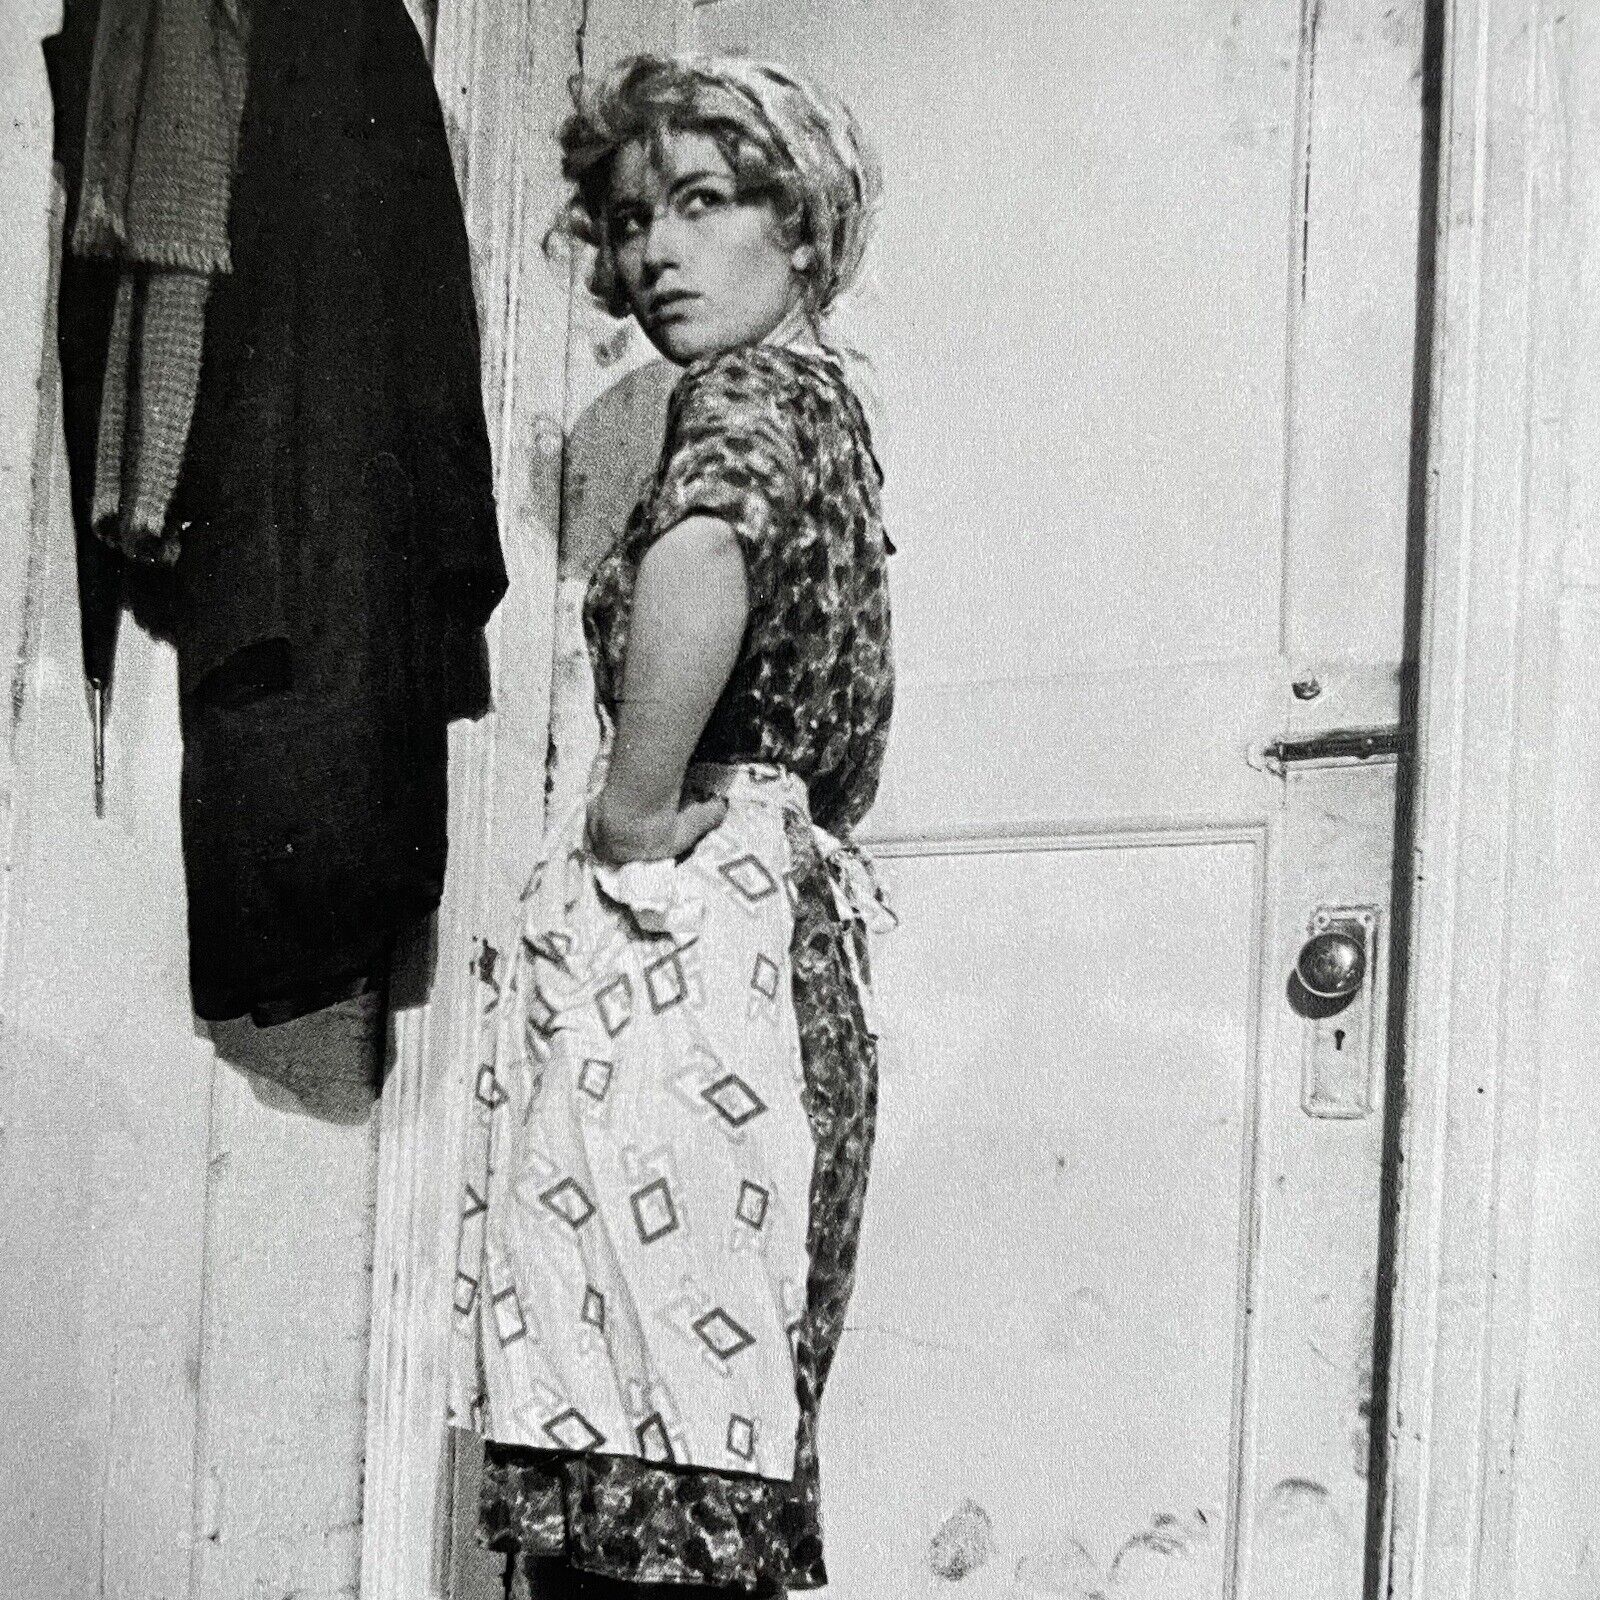 Cindy Sherman Photo 1979 Untitled Film Still #35 1980s Print Woman With Attitude